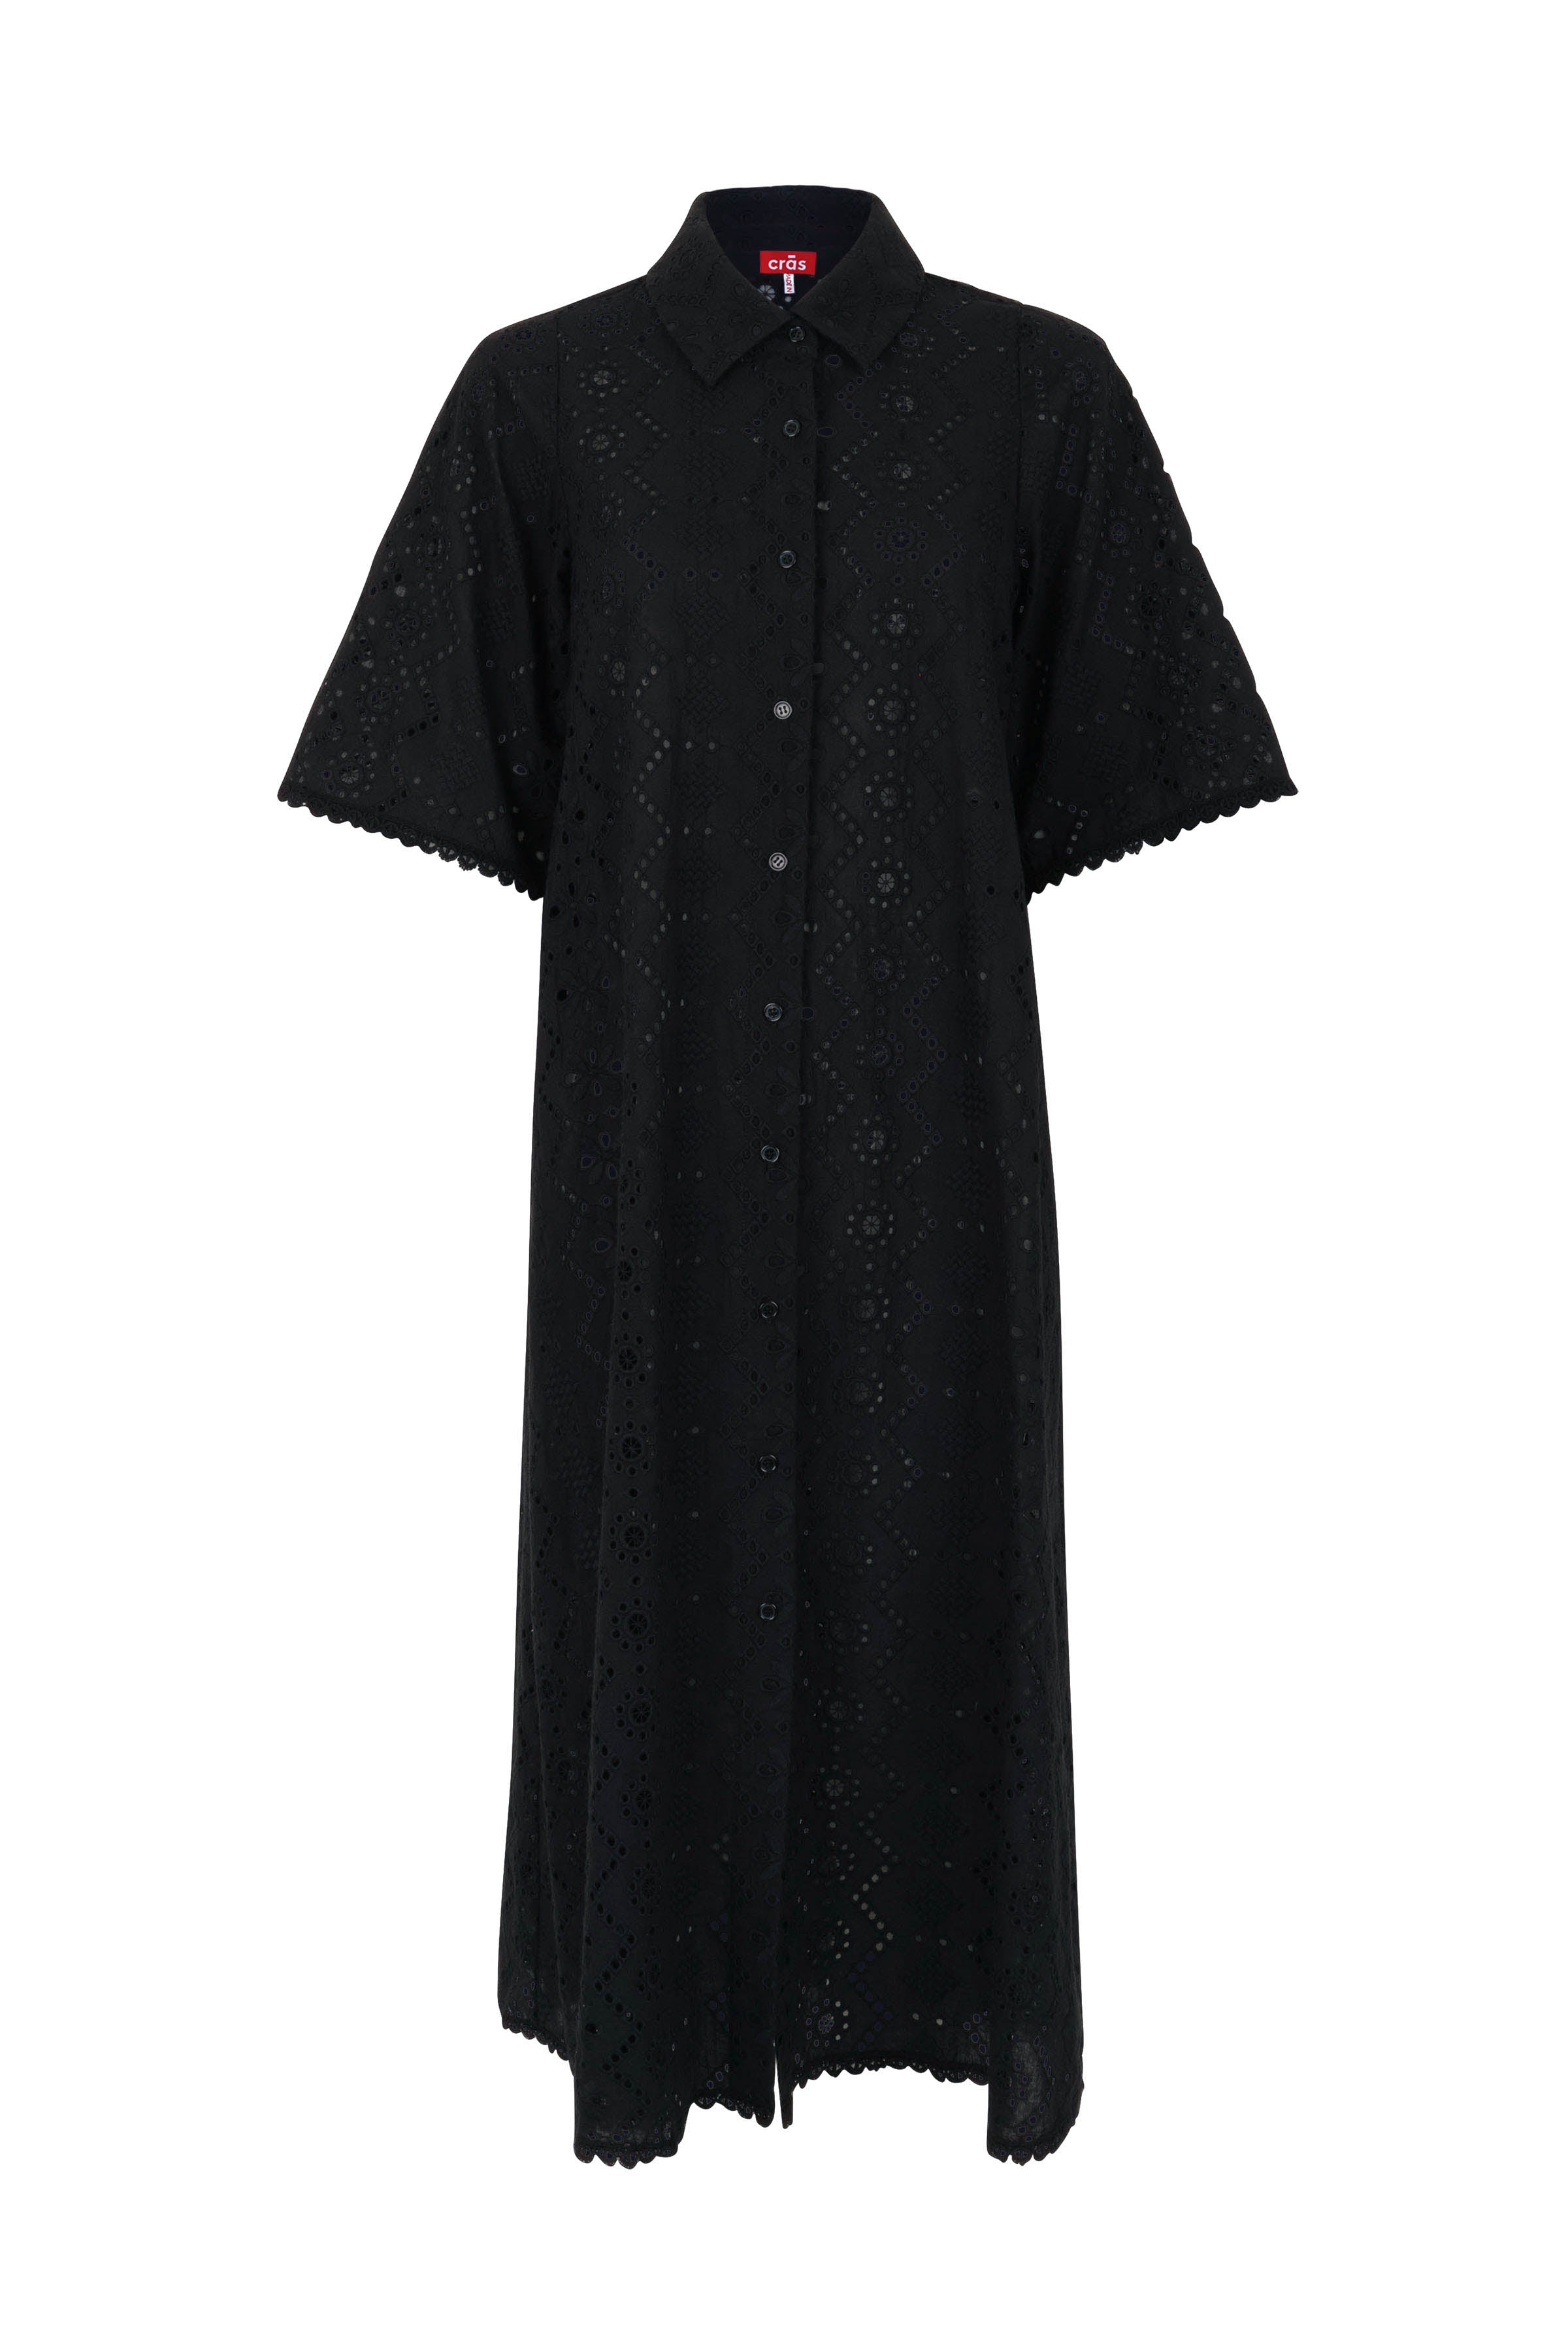 CRAS Lacy Dress Dress 9999 Black